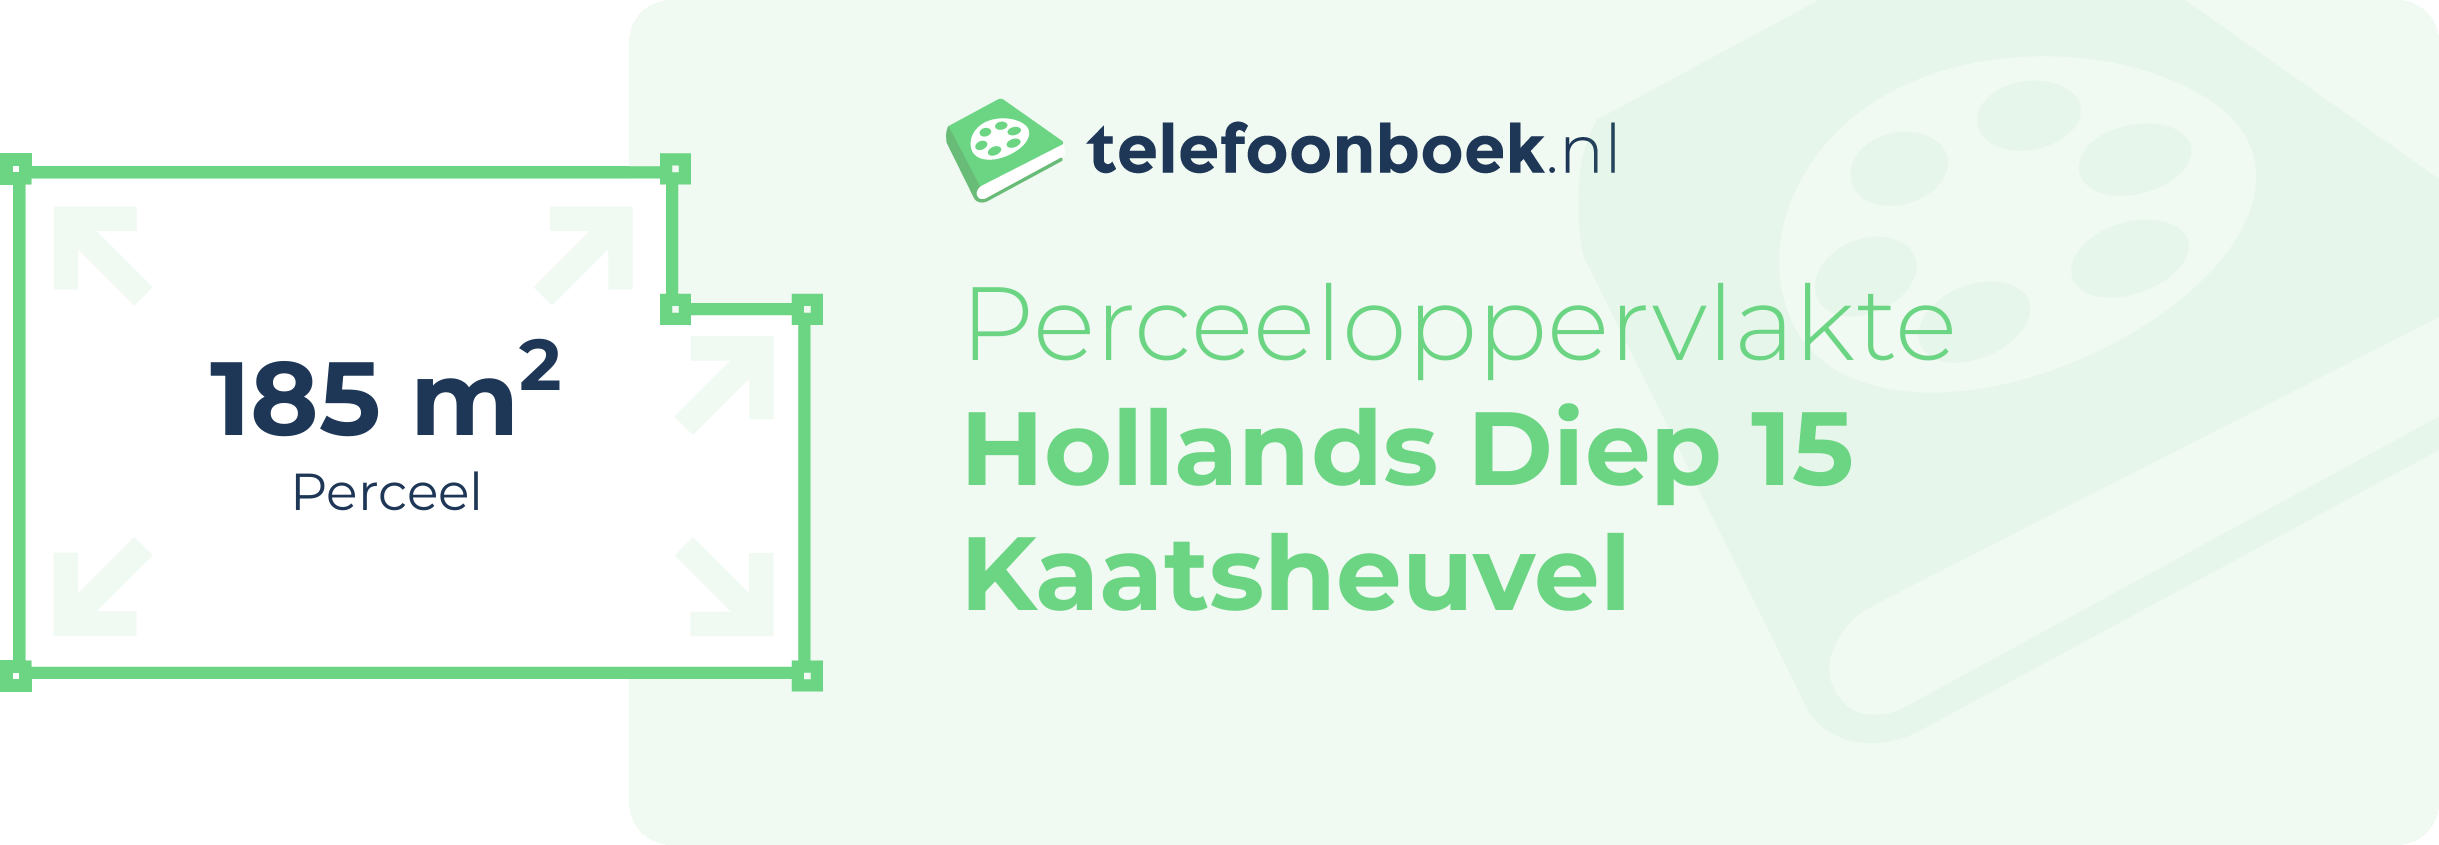 Perceeloppervlakte Hollands Diep 15 Kaatsheuvel